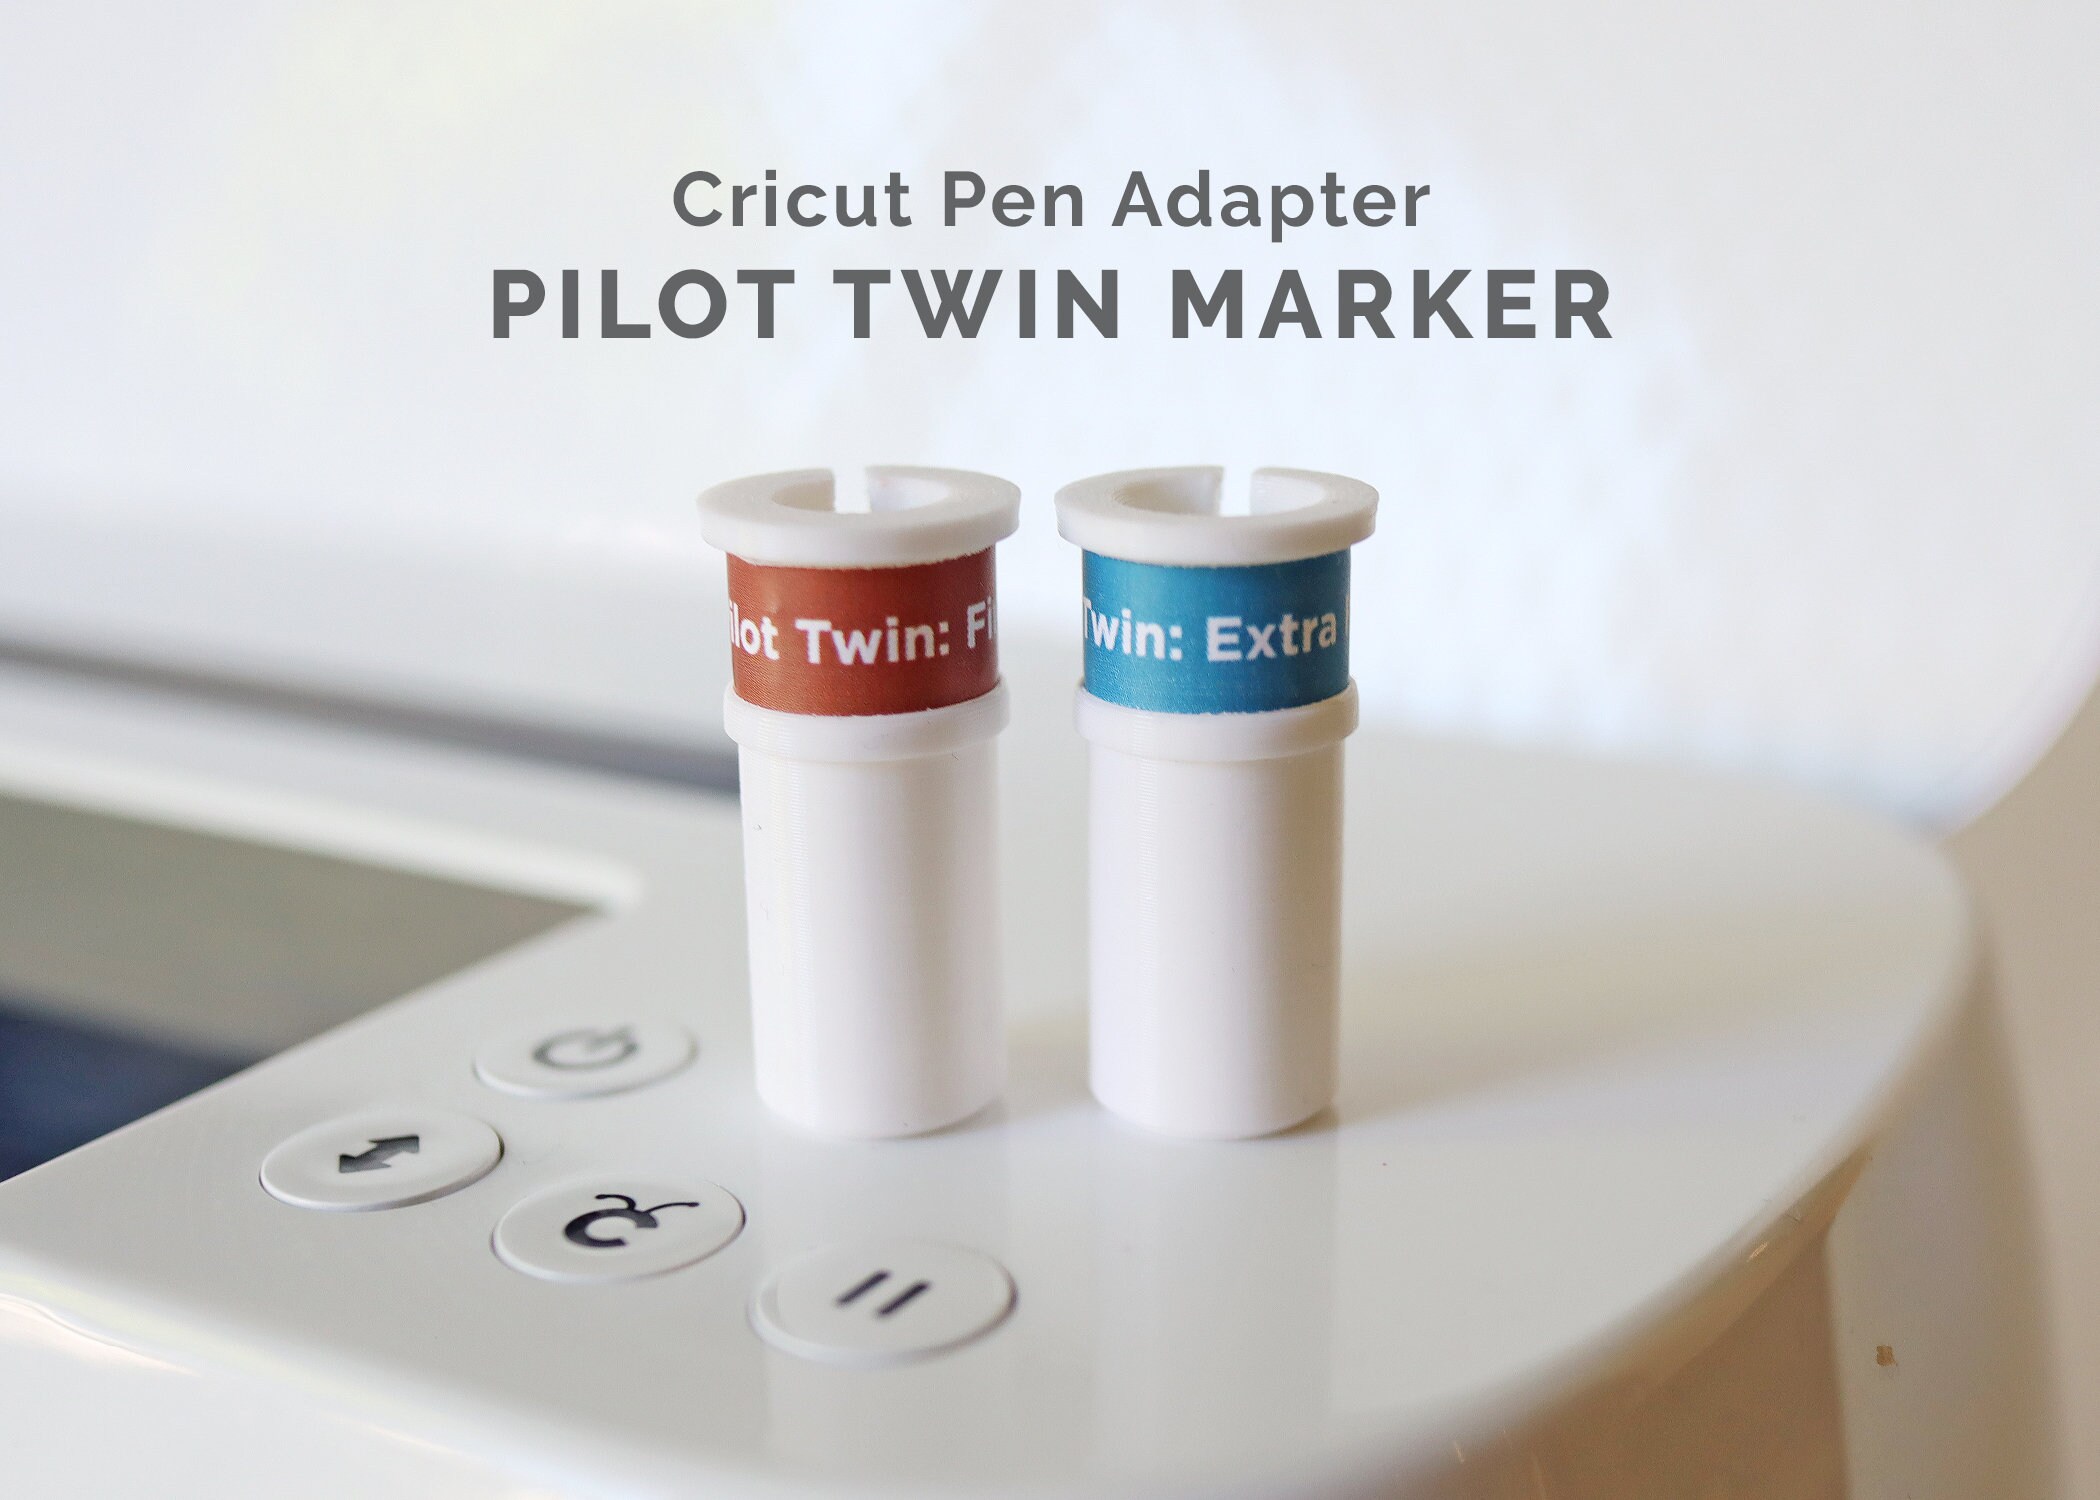 Prismacolor Pen Adapter for Cricut Machines explore Air 2, Explore Air,  Maker 